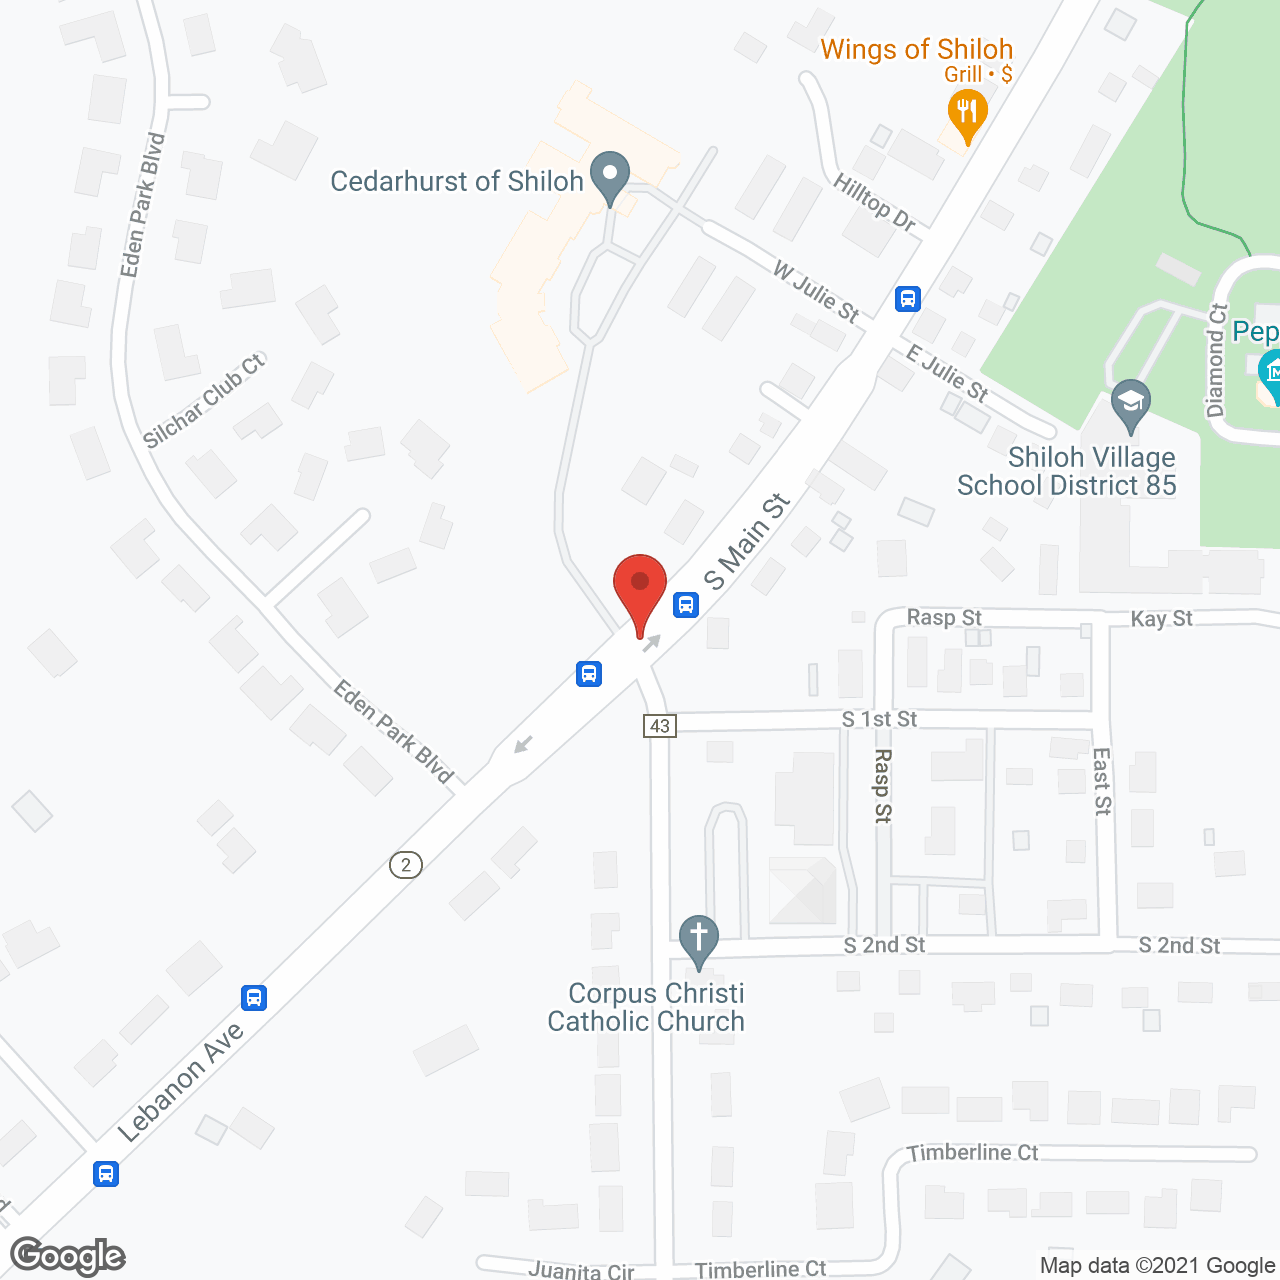 Addington Place of Shiloh in google map